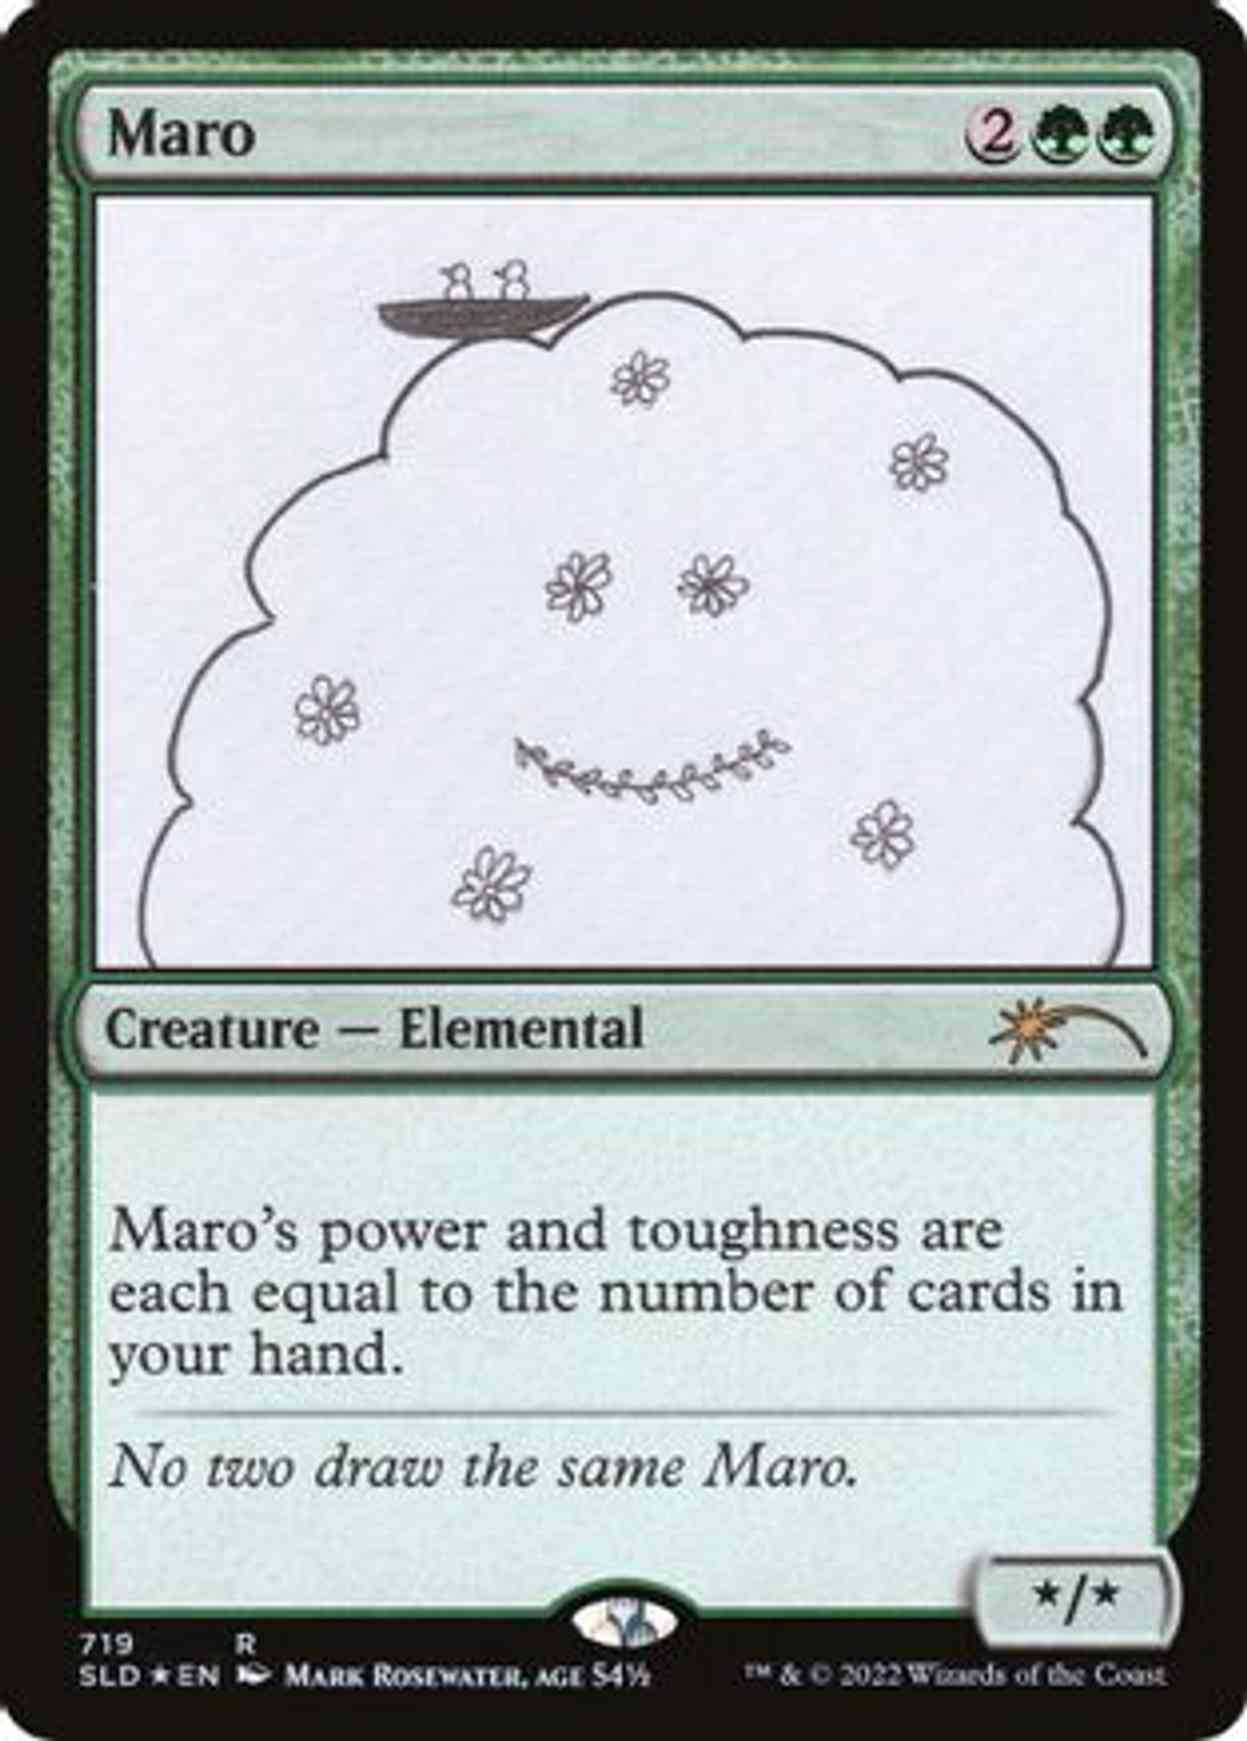 Maro (719) magic card front